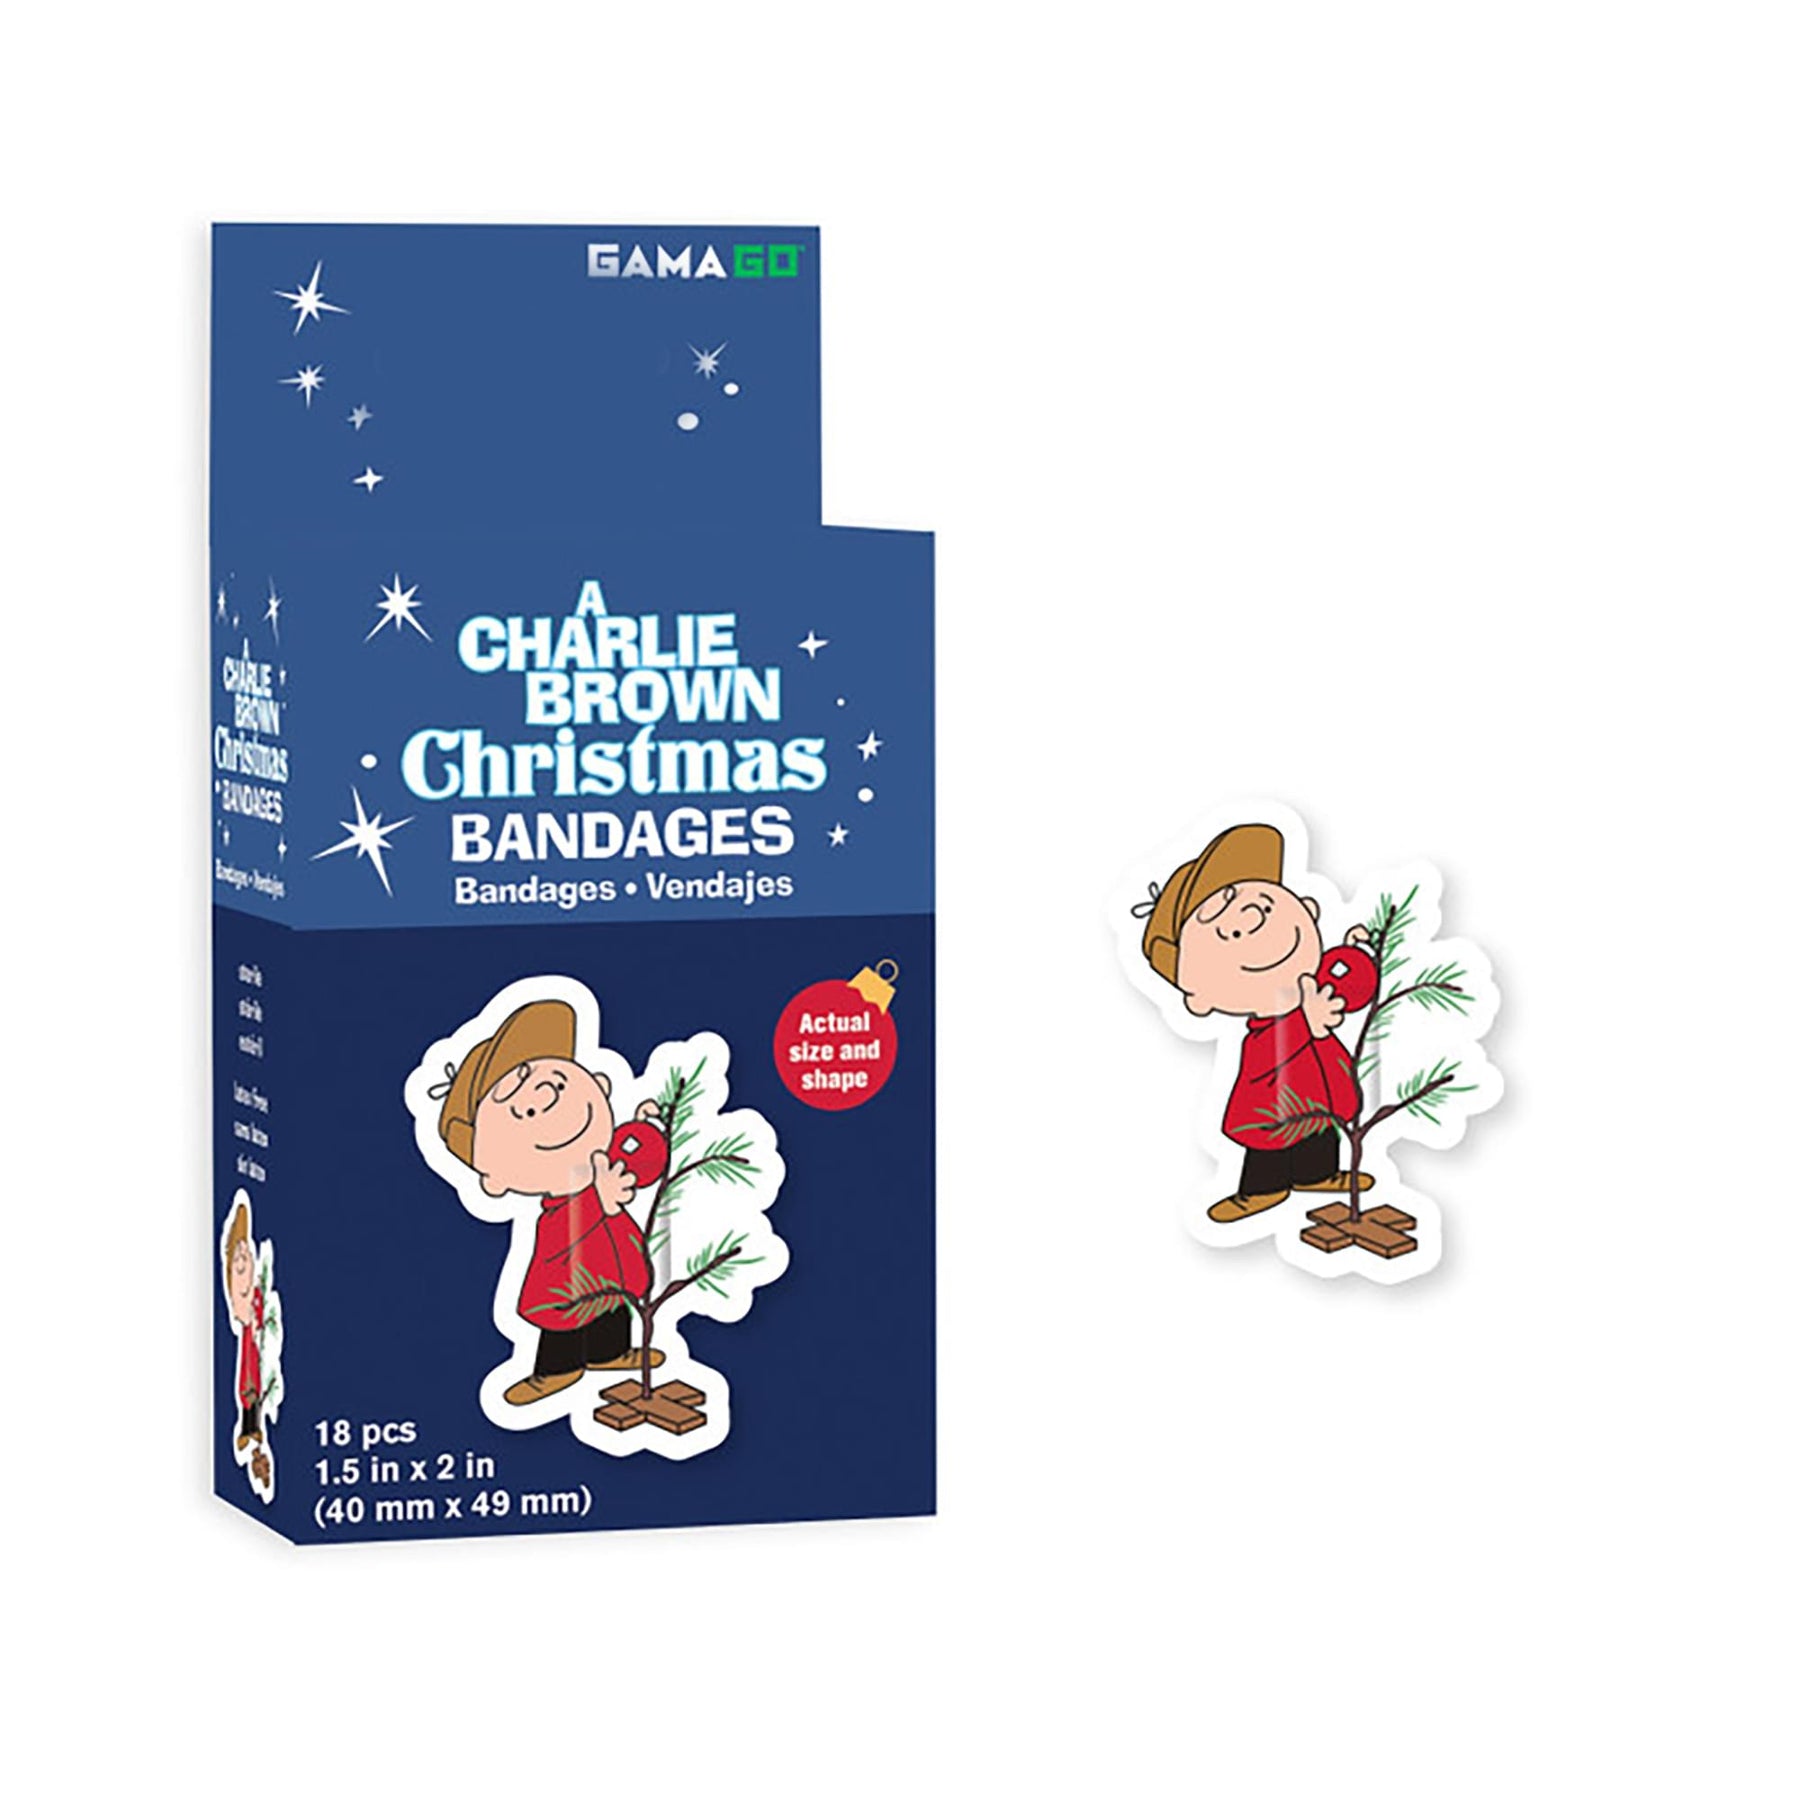 Peanuts A Charlie Brown Christmas Adhesive Bandages | Set of 18